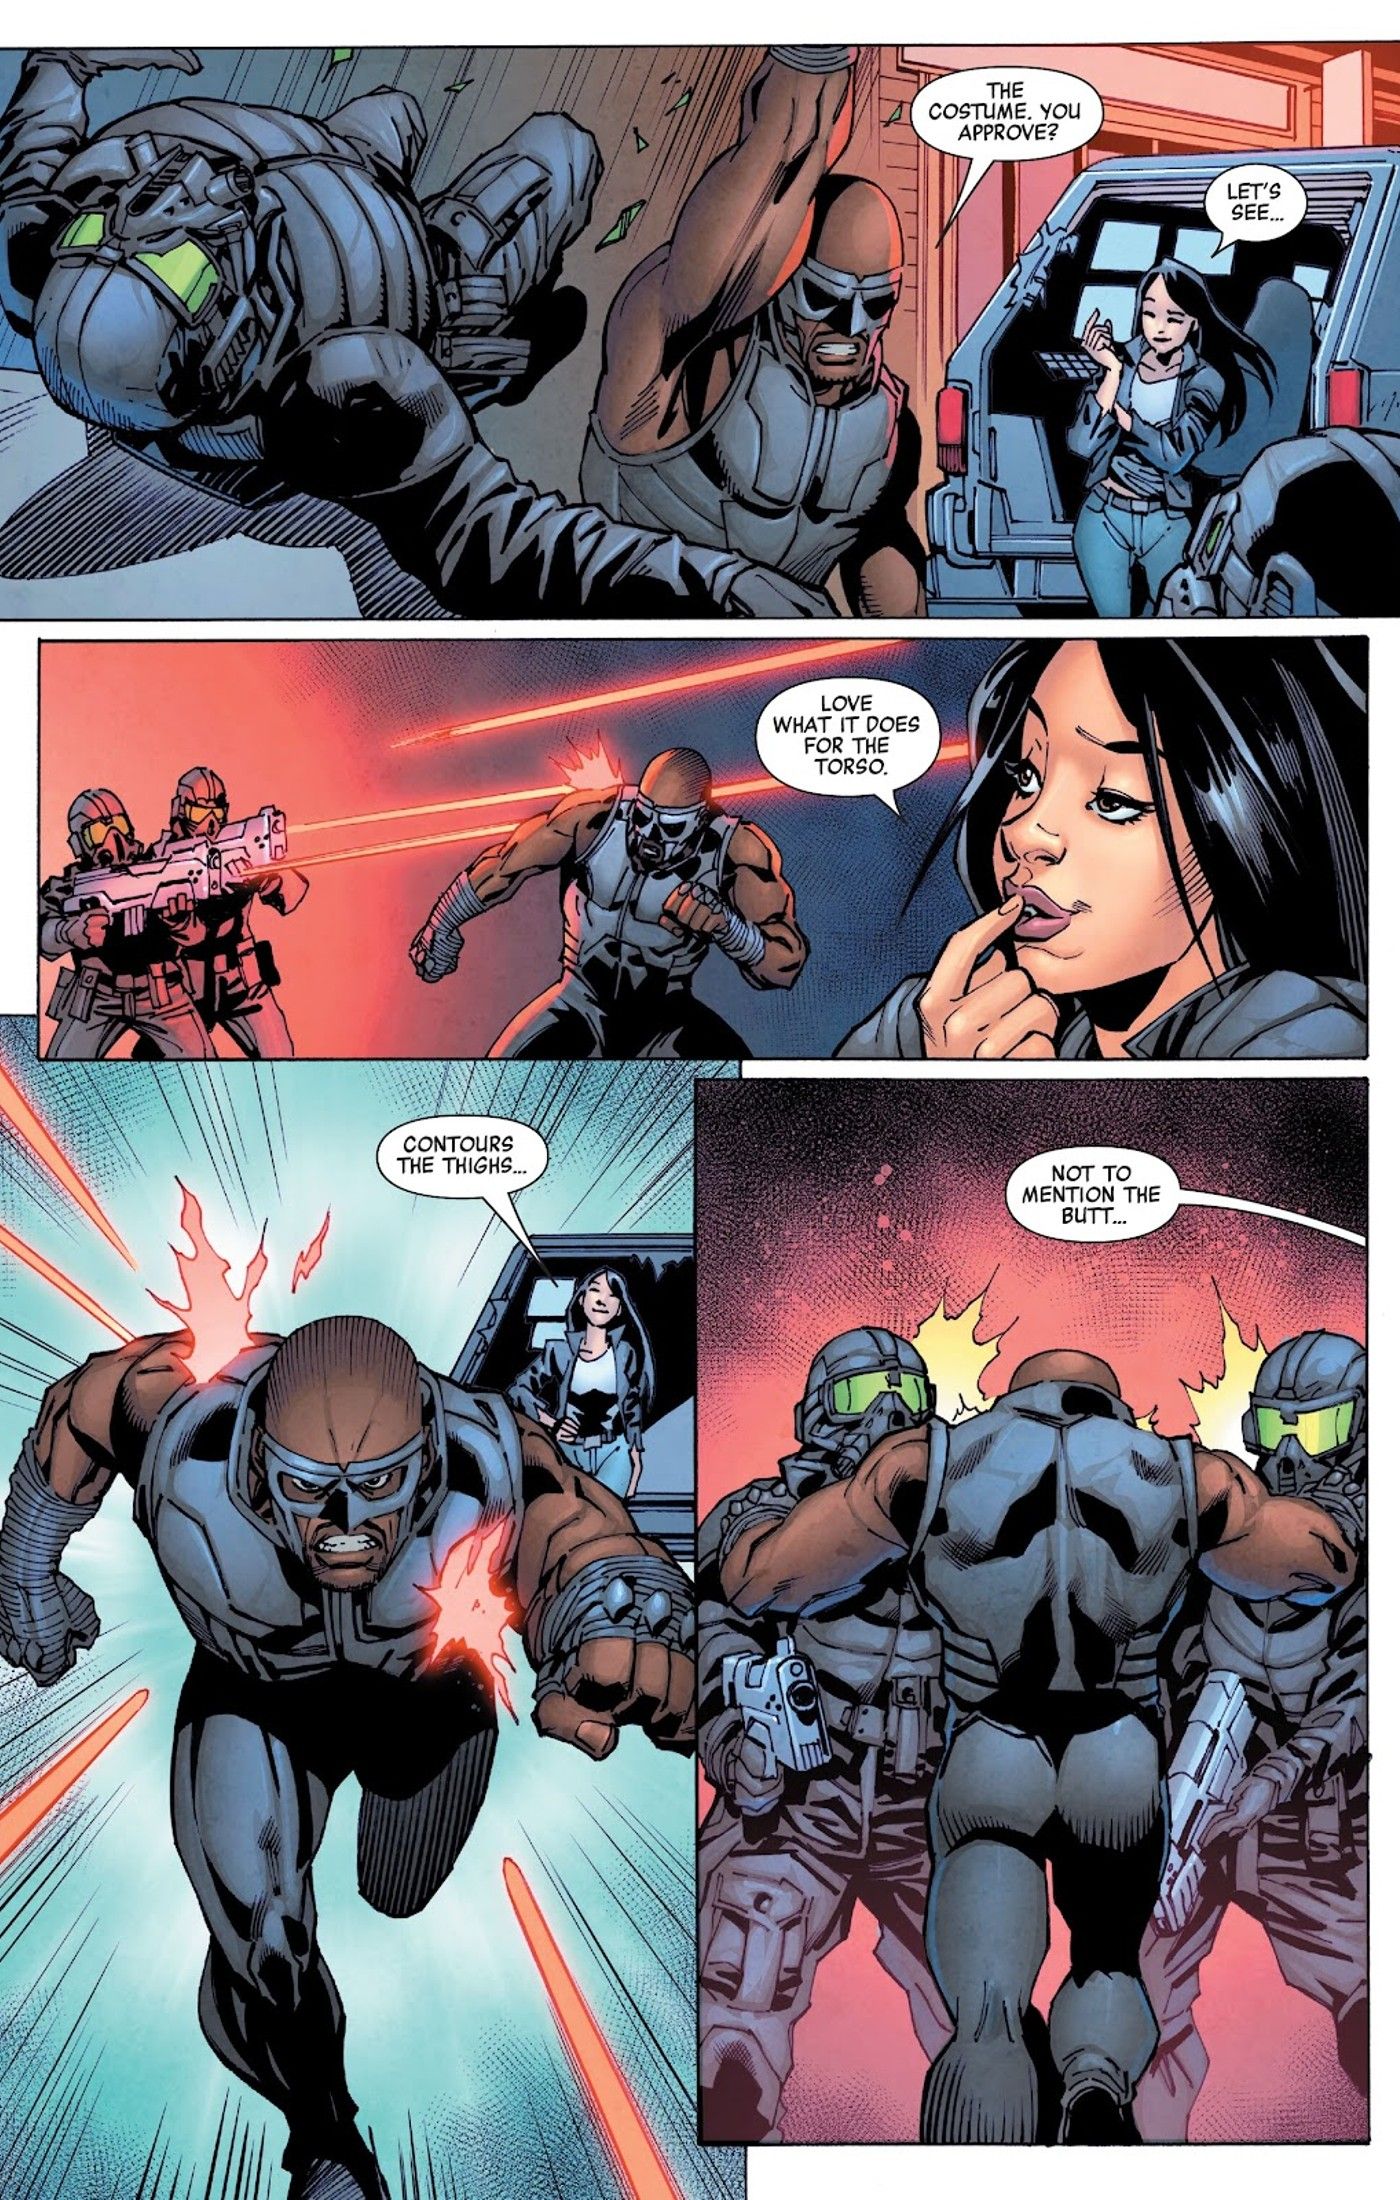 panels from Luke Cage: Gang War #2, Jessica Jones admires her husband Luke Cage's body